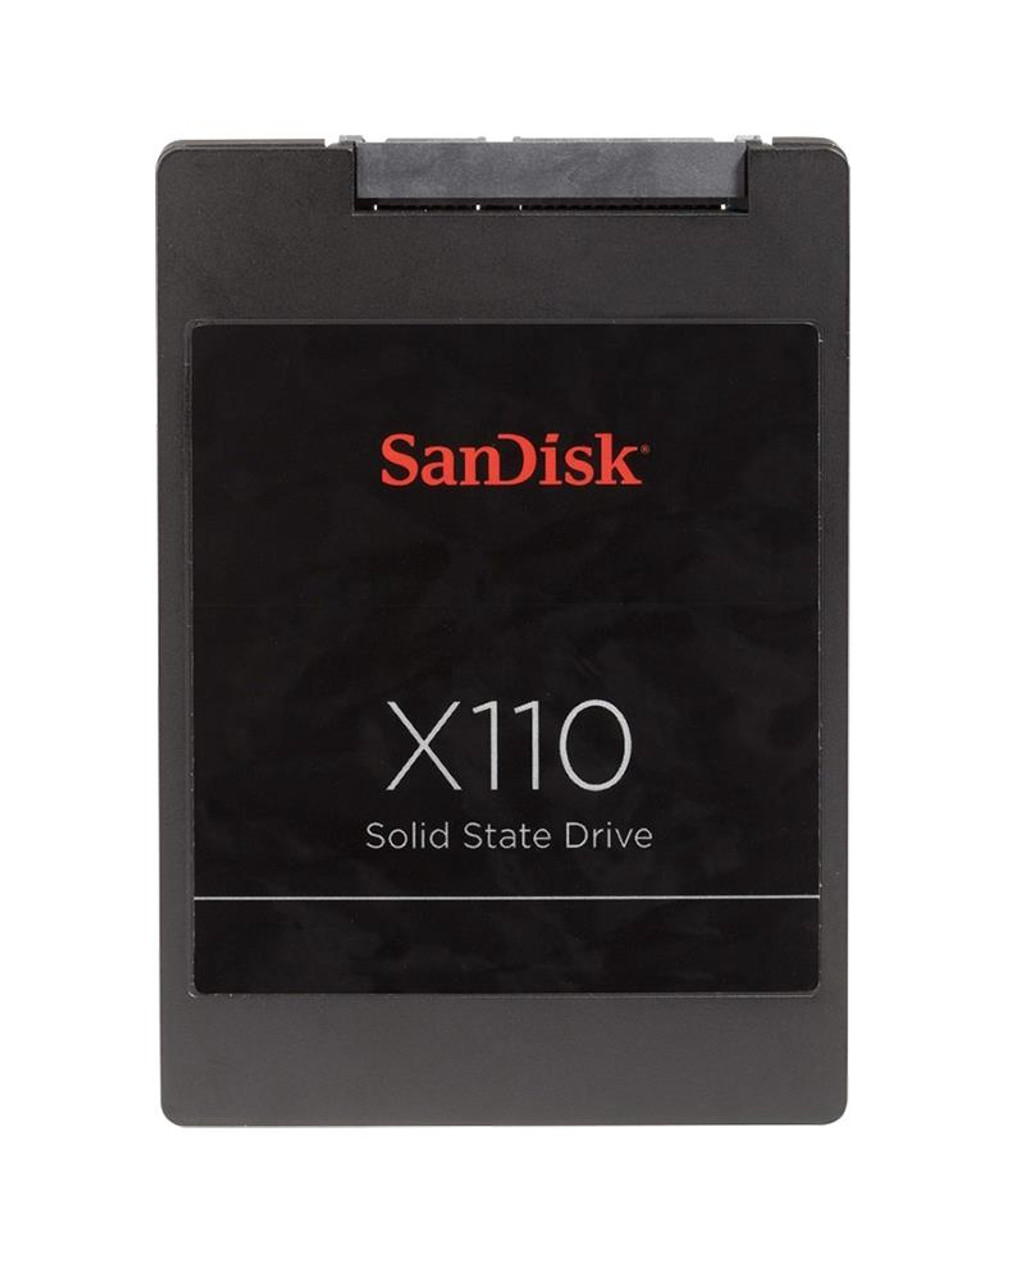 SD6SB1M-128G-1002I SanDisk X110 128GB MLC SATA 6Gbps 2.5-inch Internal Solid State Drive (SSD)